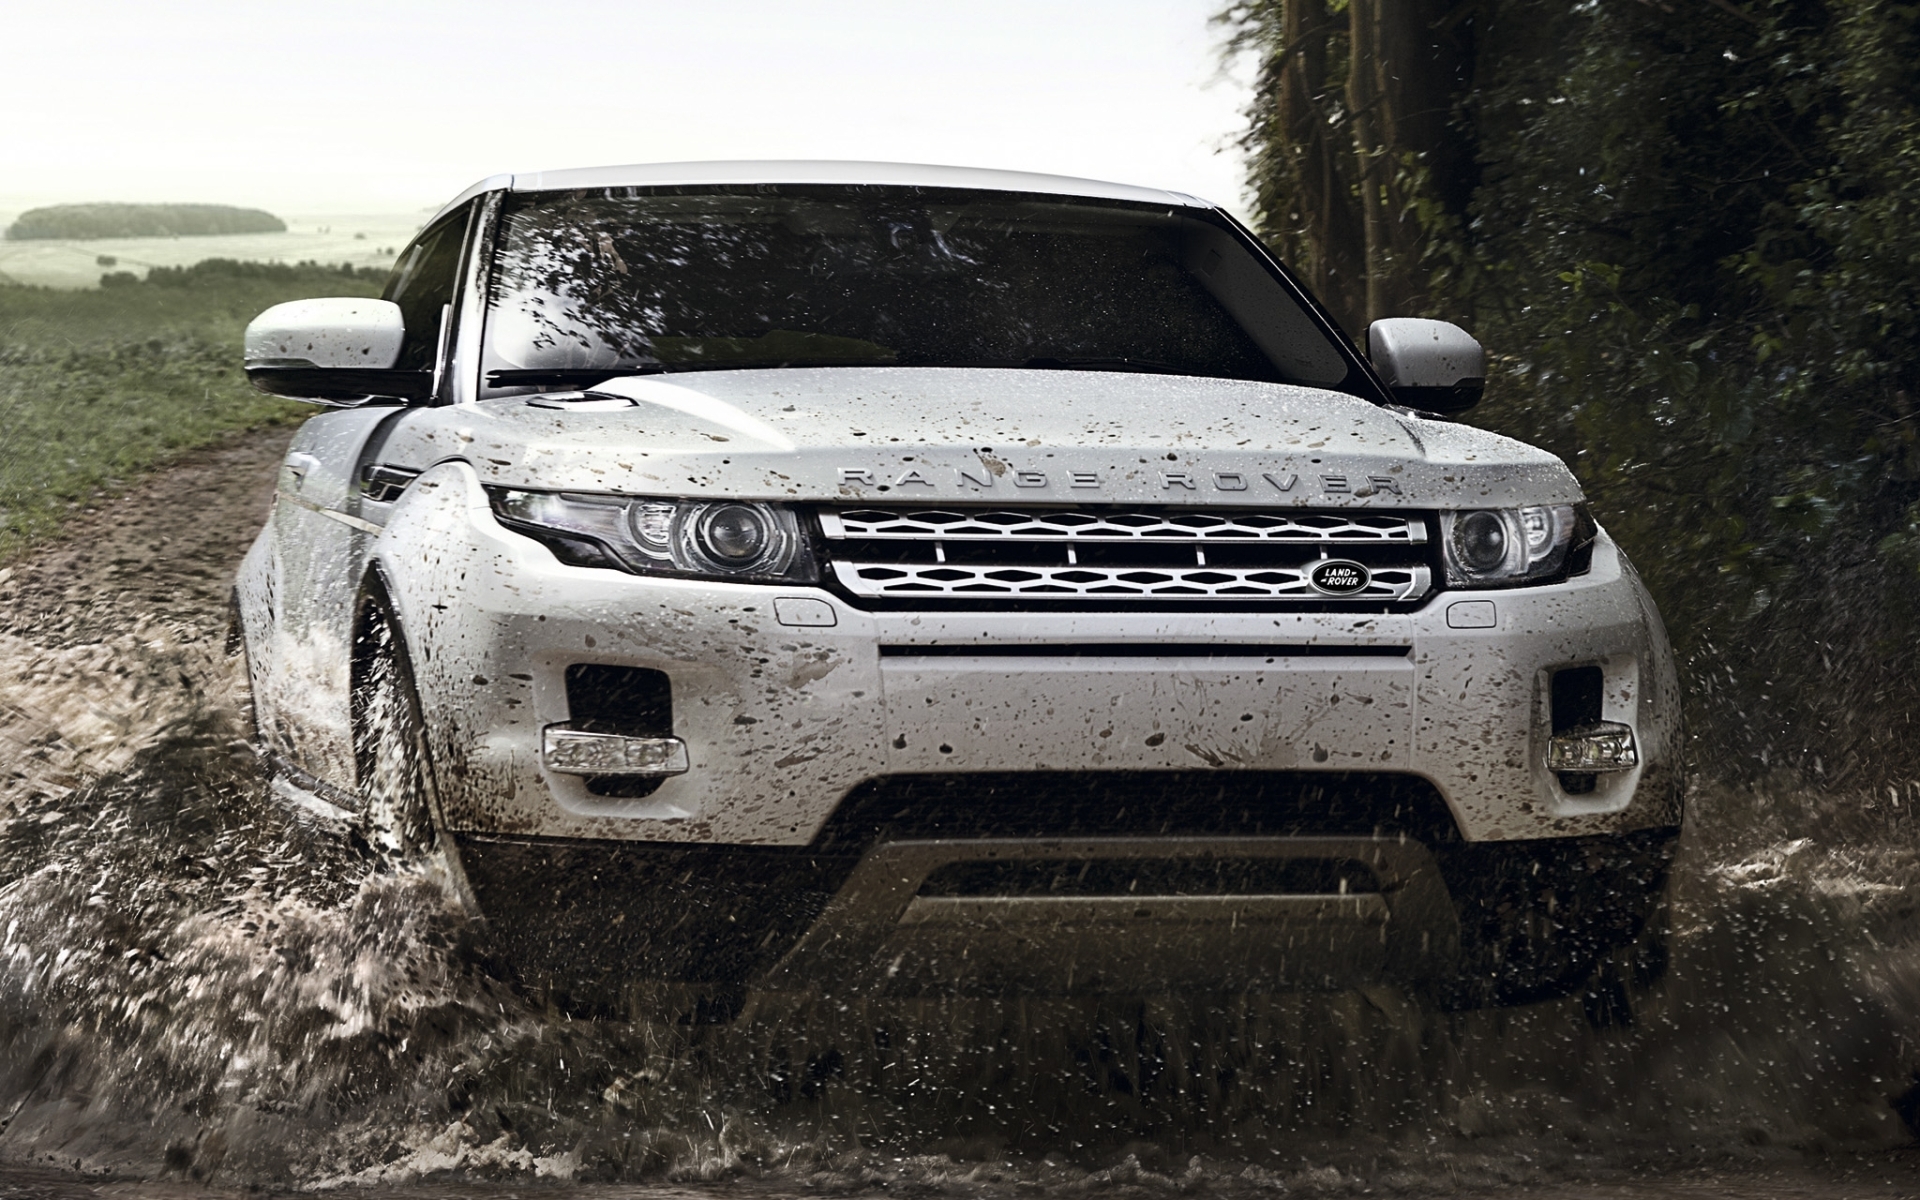 Скачати мобільні шпалери Range Rover Evoque, Range Rover, Транспортні Засоби безкоштовно.